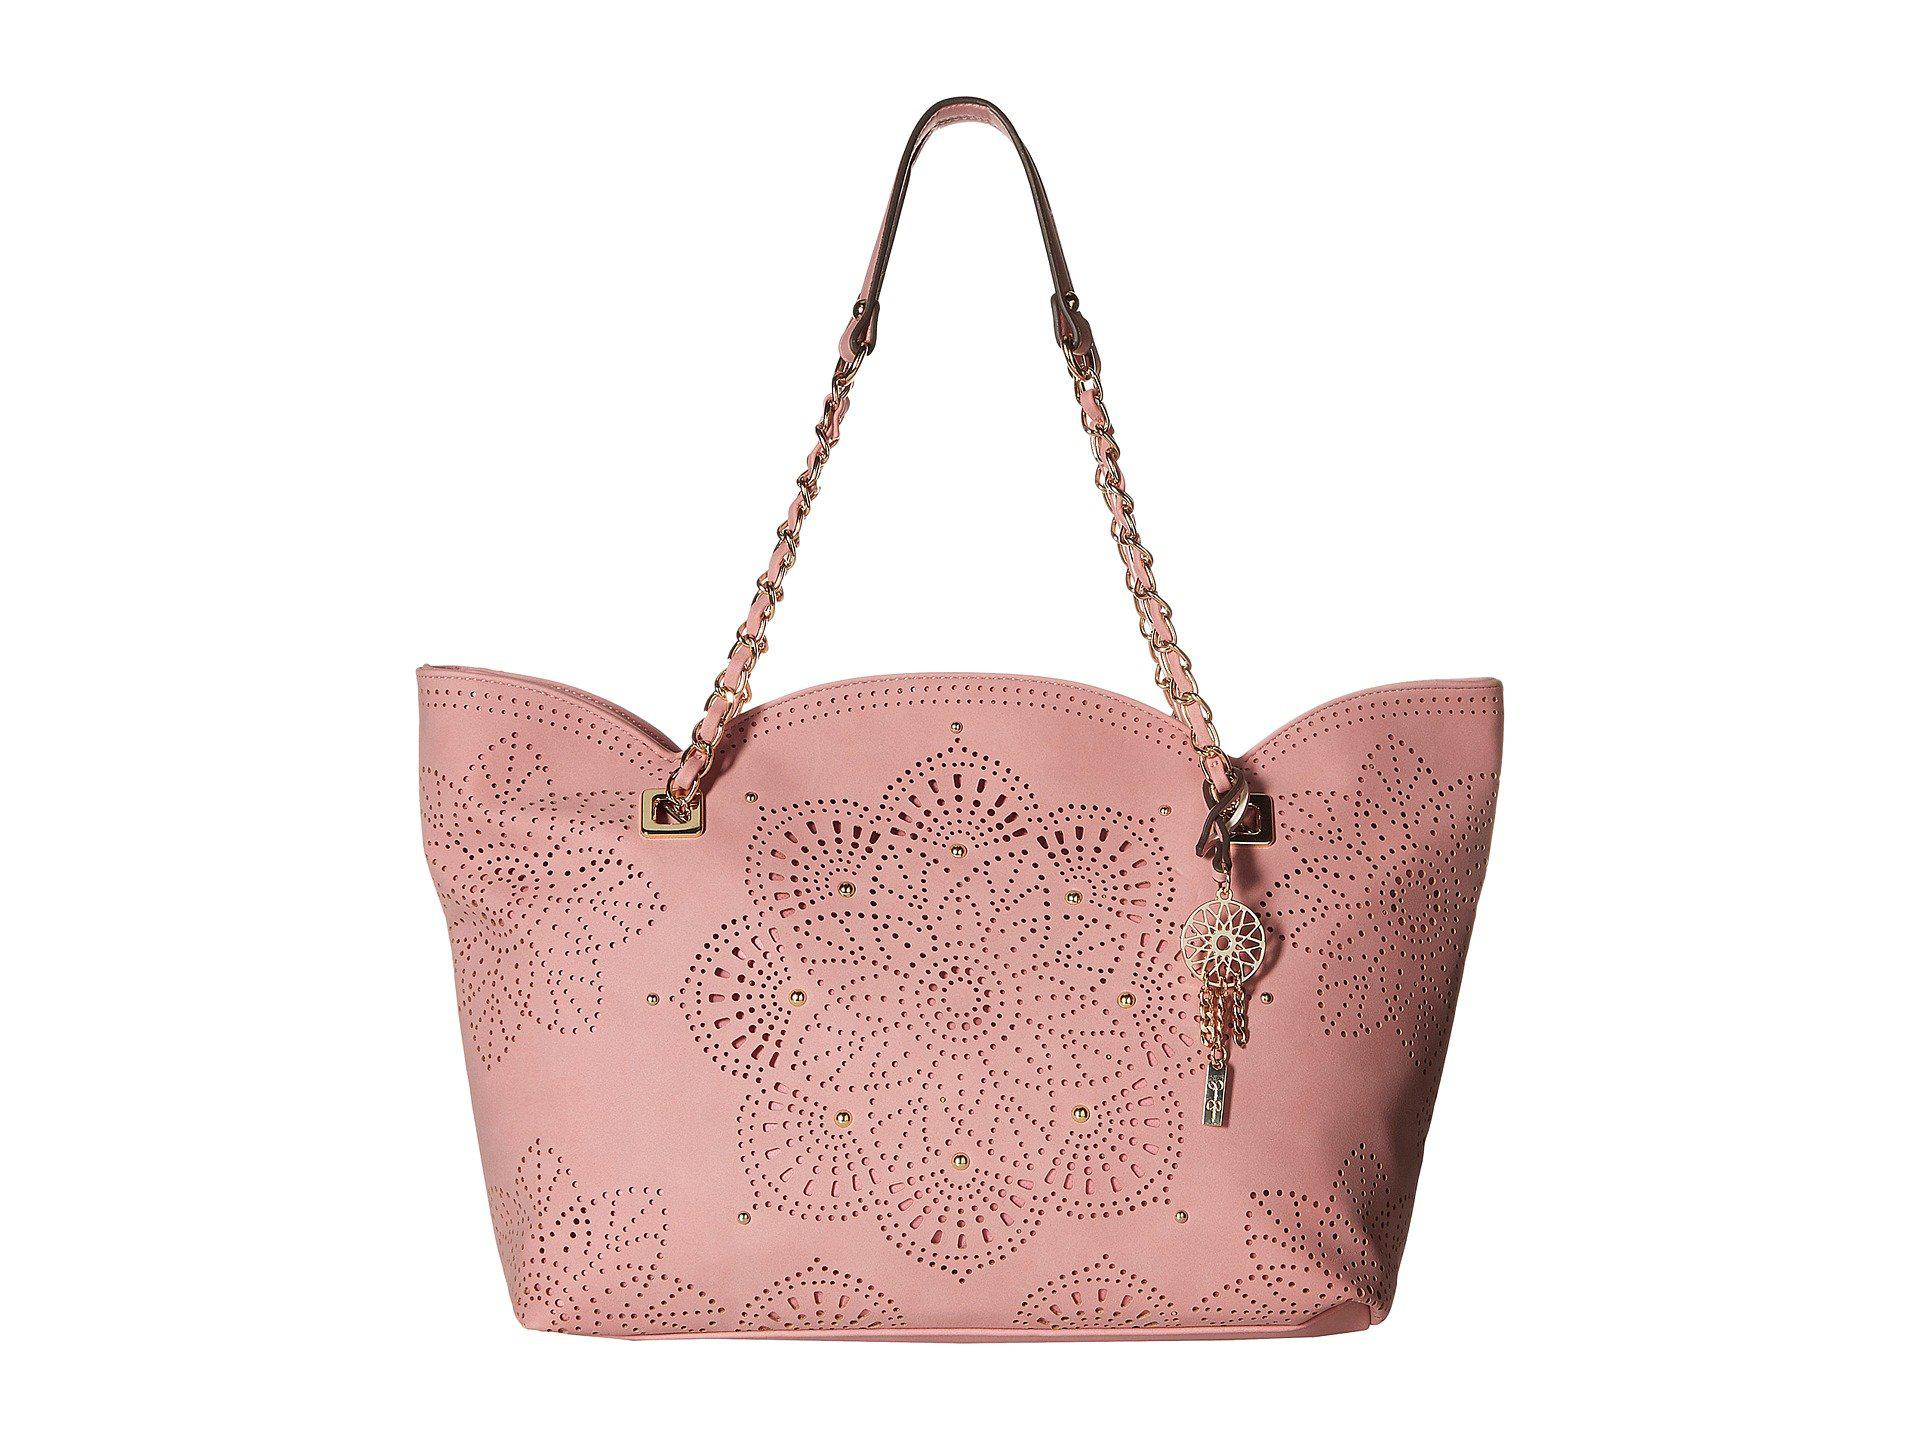 Jessica Simpson Doris Tote Bag in Pink